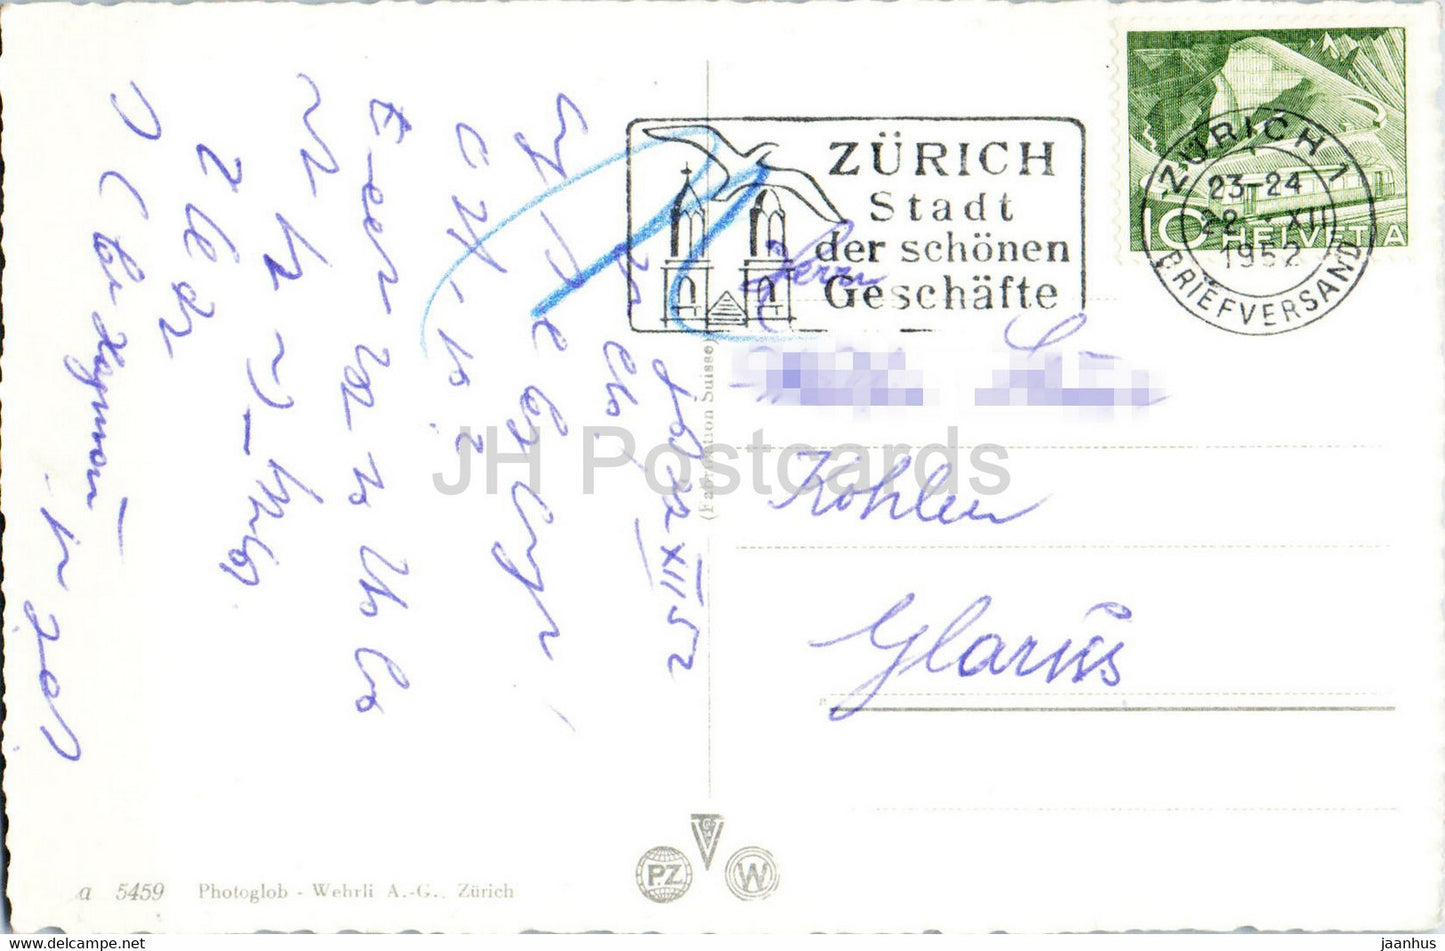 Zurcher Wehrmanner Denkmal auf der Forch - monument - 5459 - carte postale ancienne - 1952 - Suisse - utilisé